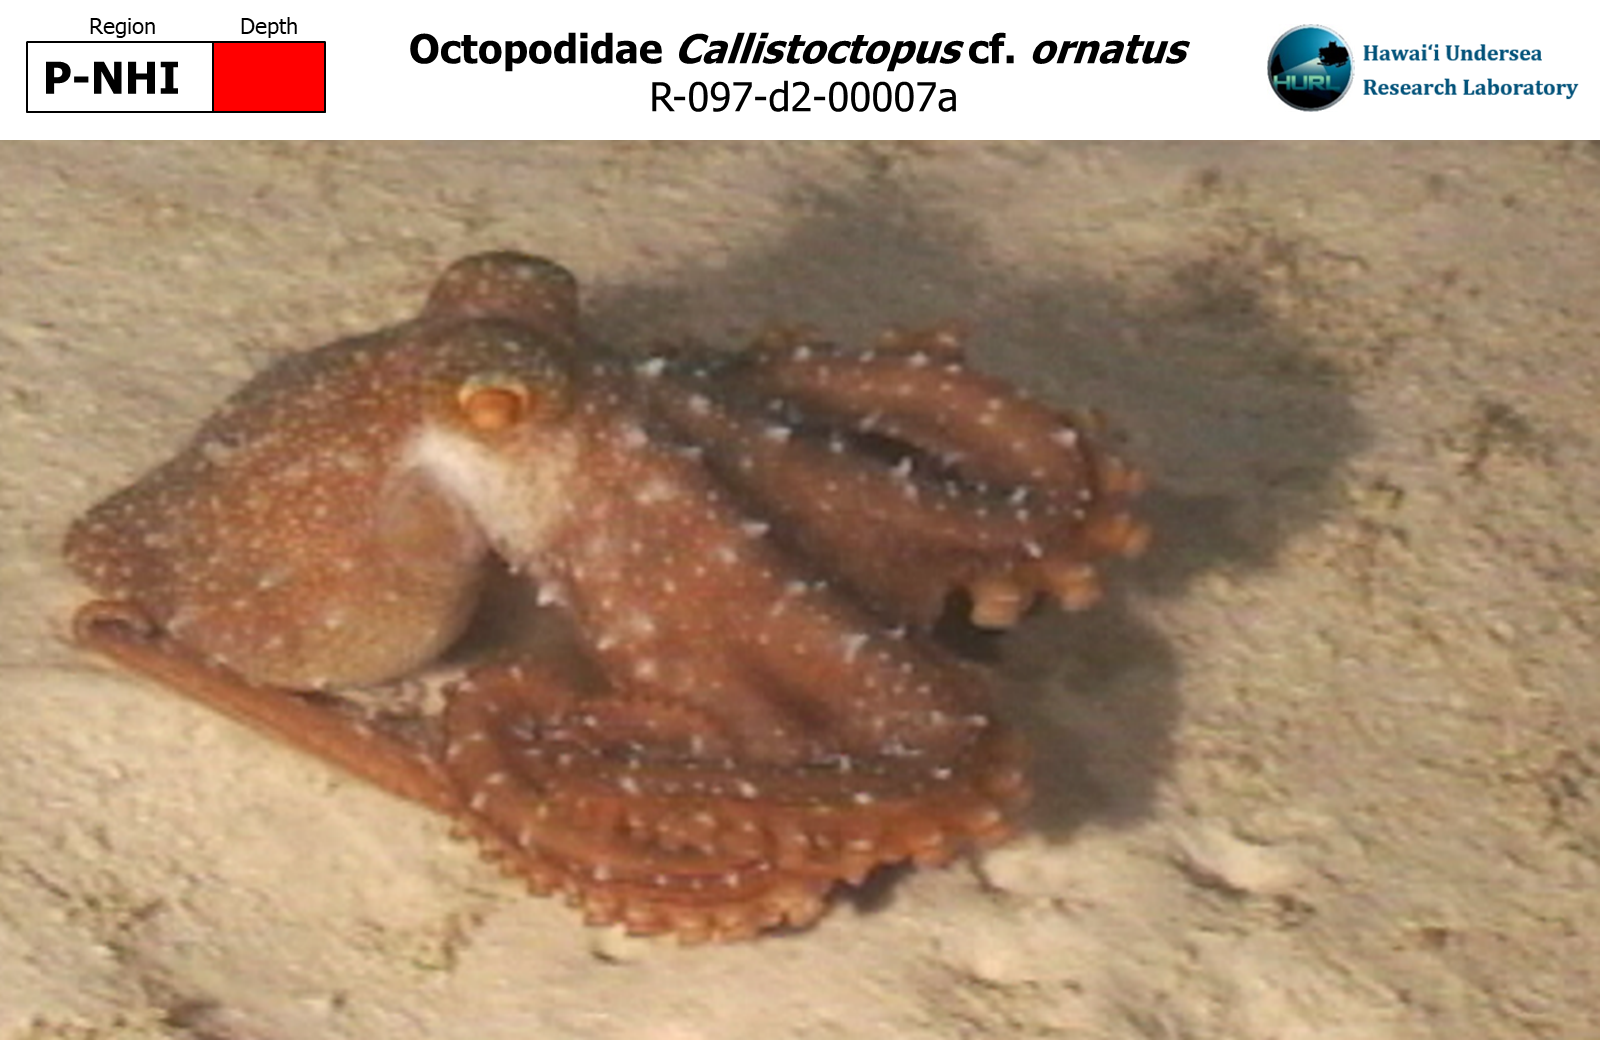 Callistoctopus cf. ornatus